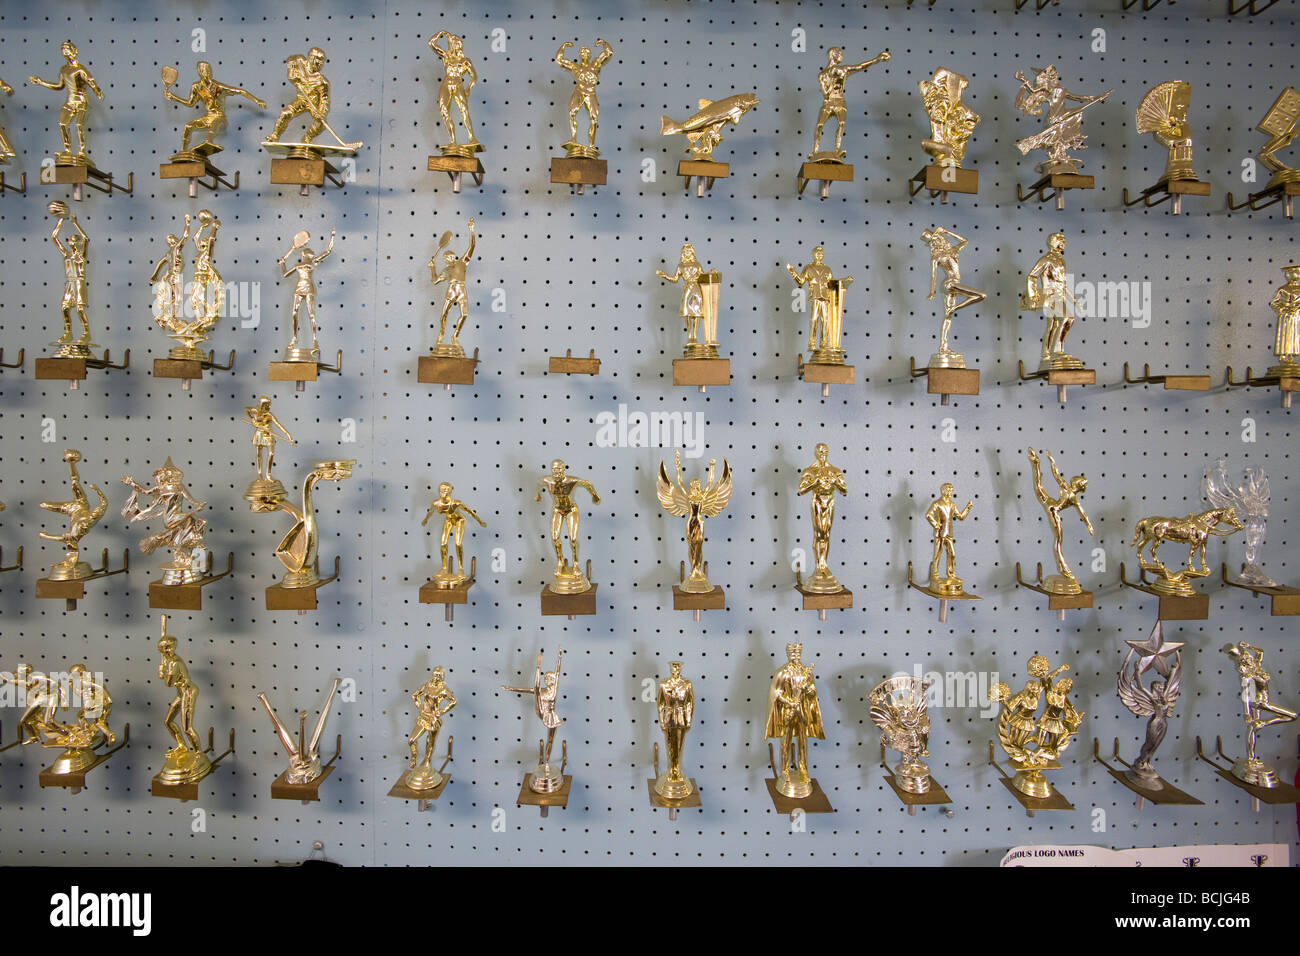 Display rack showing metal figurines used in trophy statues Stock Photo